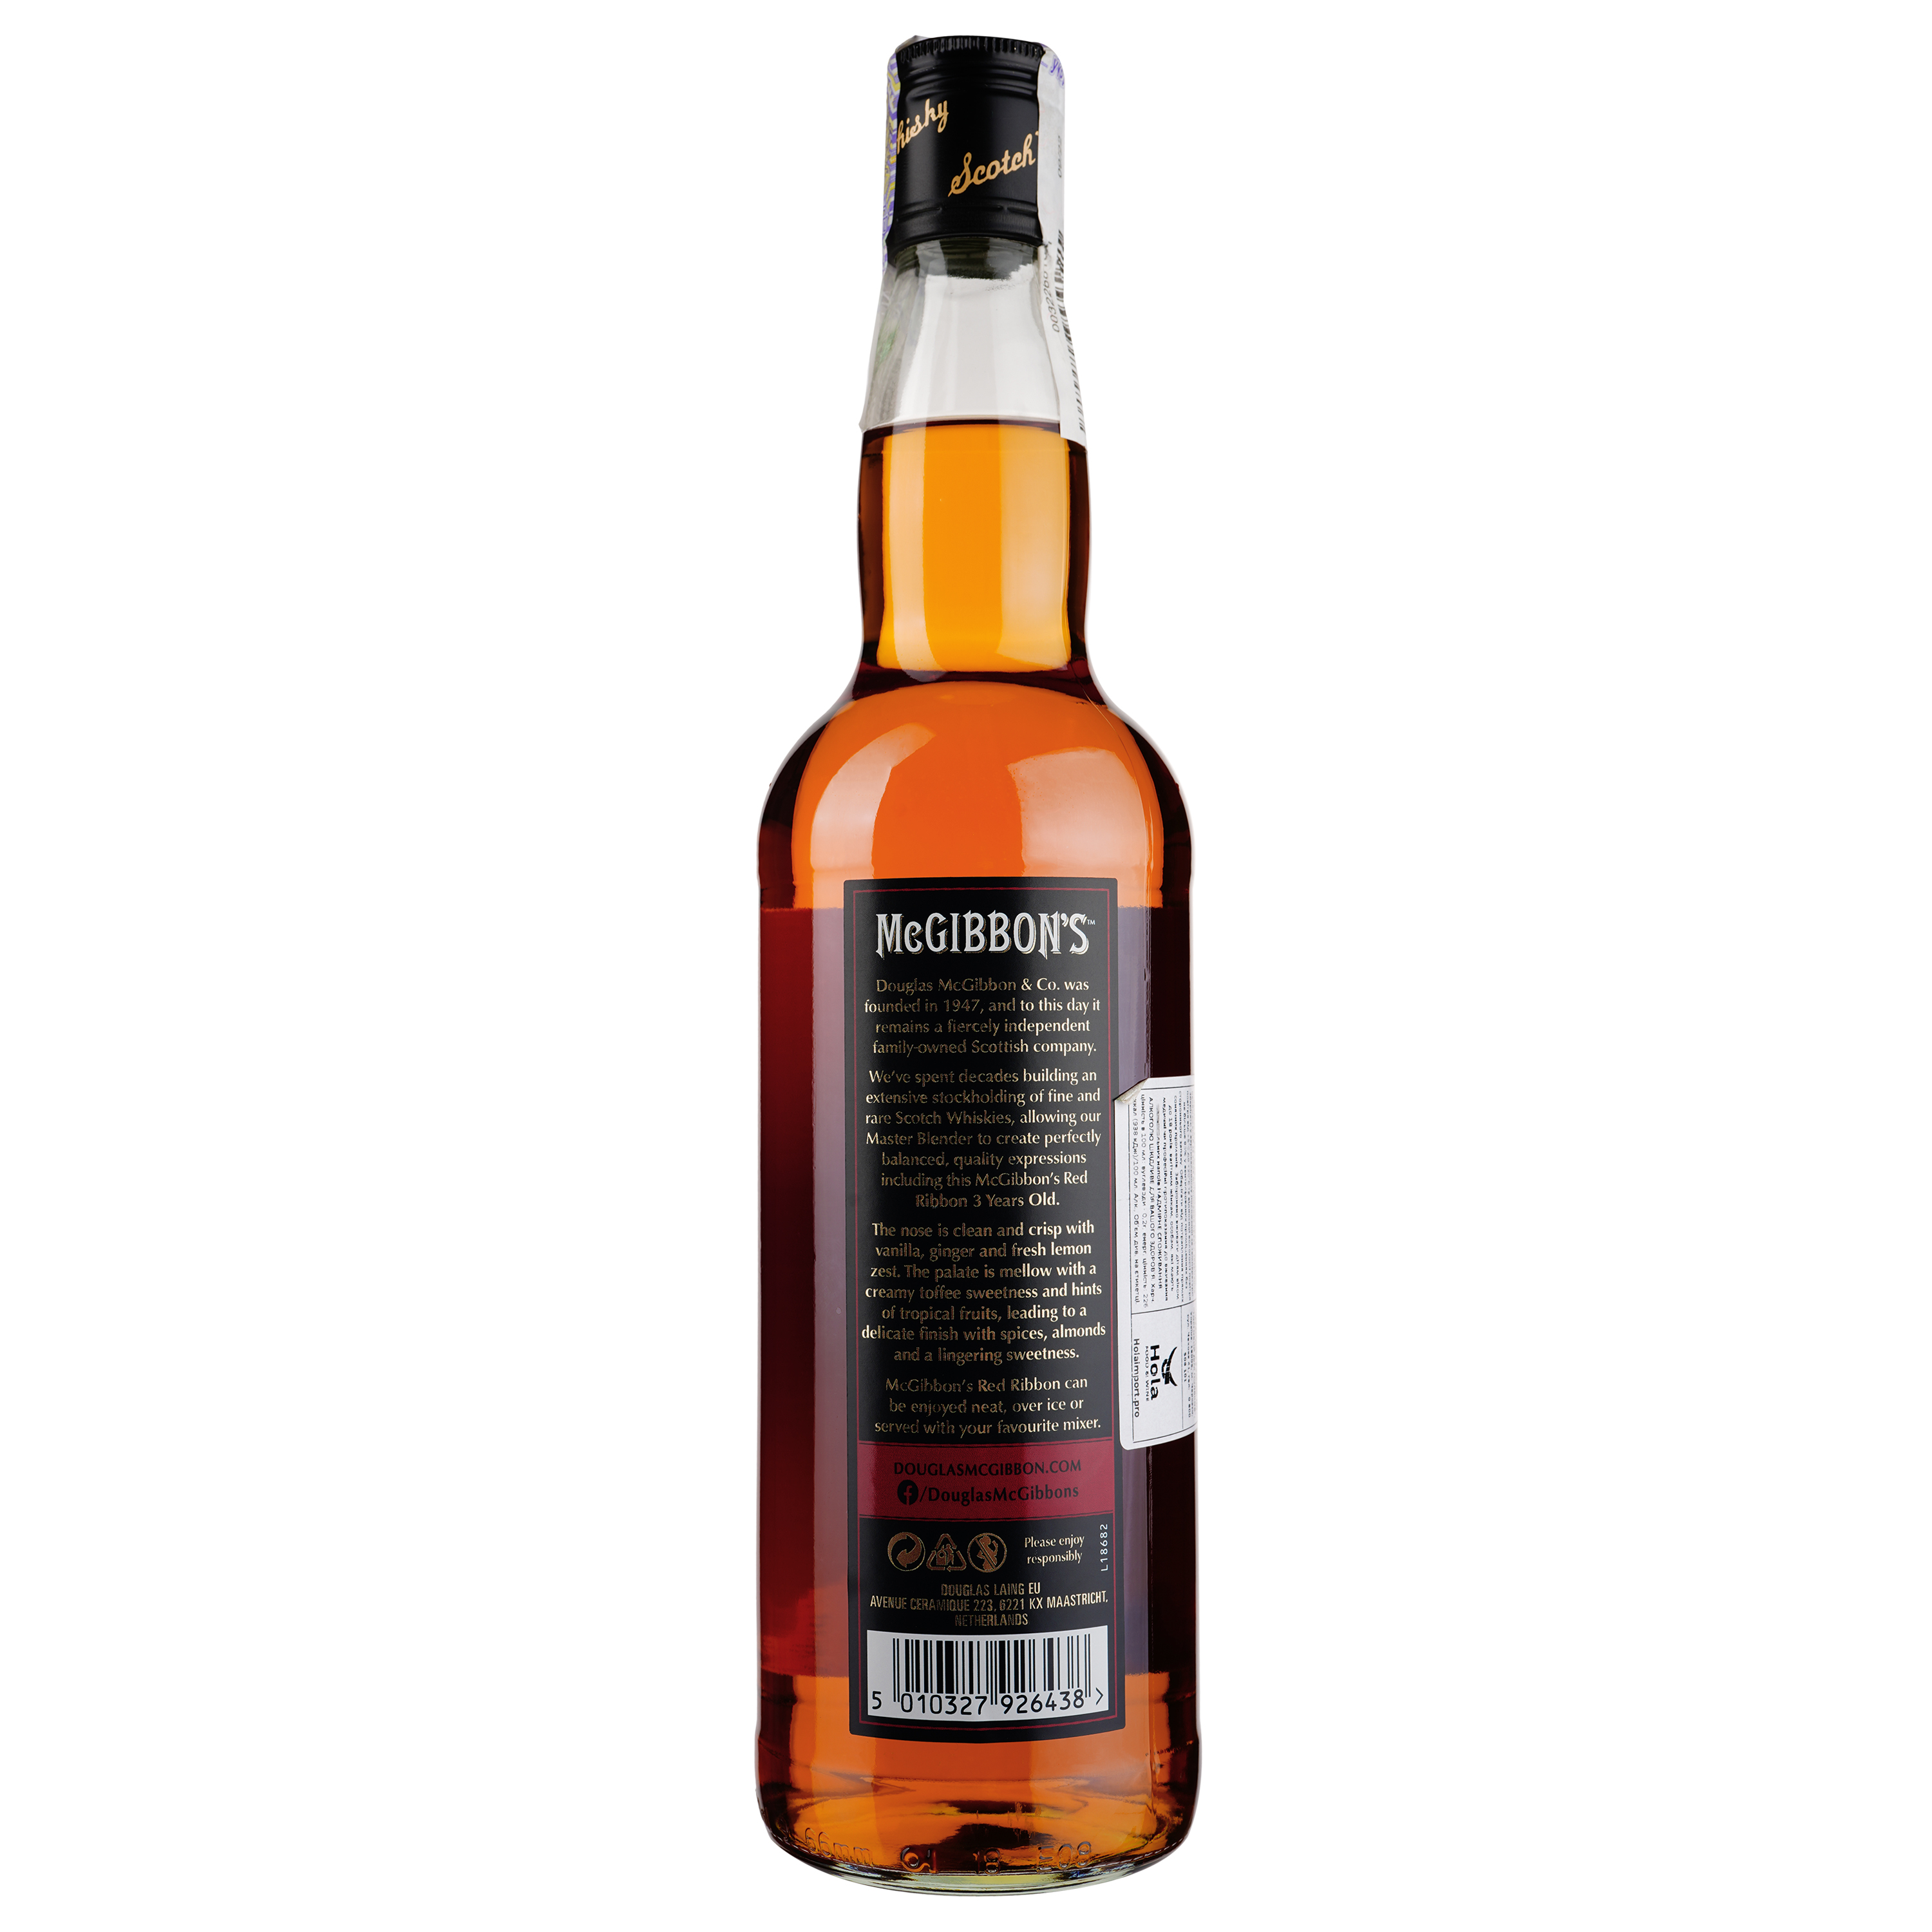 Віскі Mc Gibbons Red Ribbon Blended Scotch Whisky 3 yo, 40%, 0,7 л - фото 2